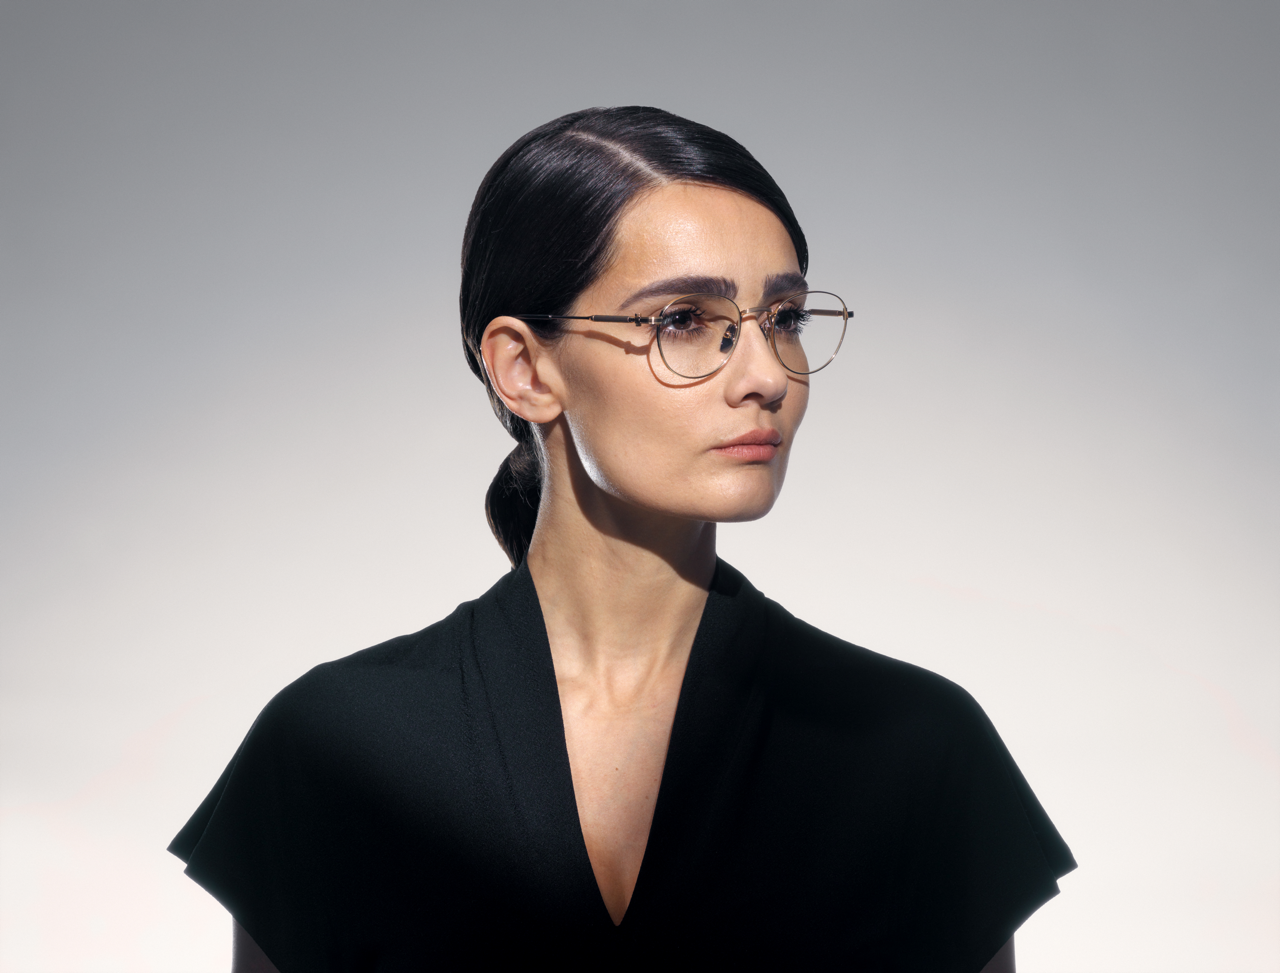 akoni pioneer optical glasses lifestyle side female